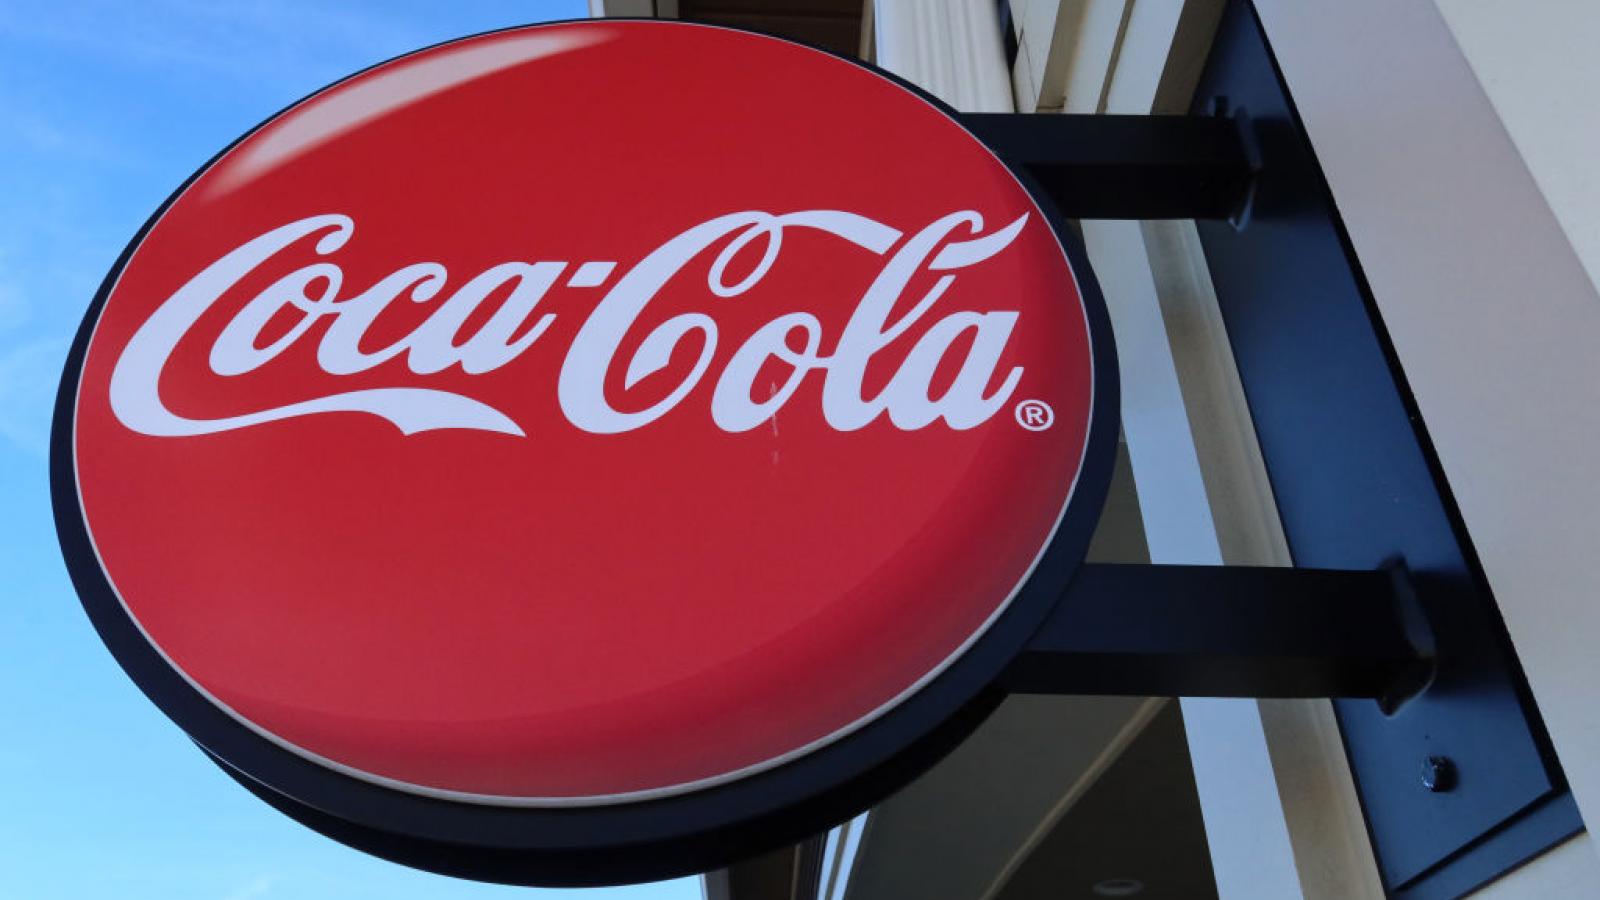 The Coca-Cola logo